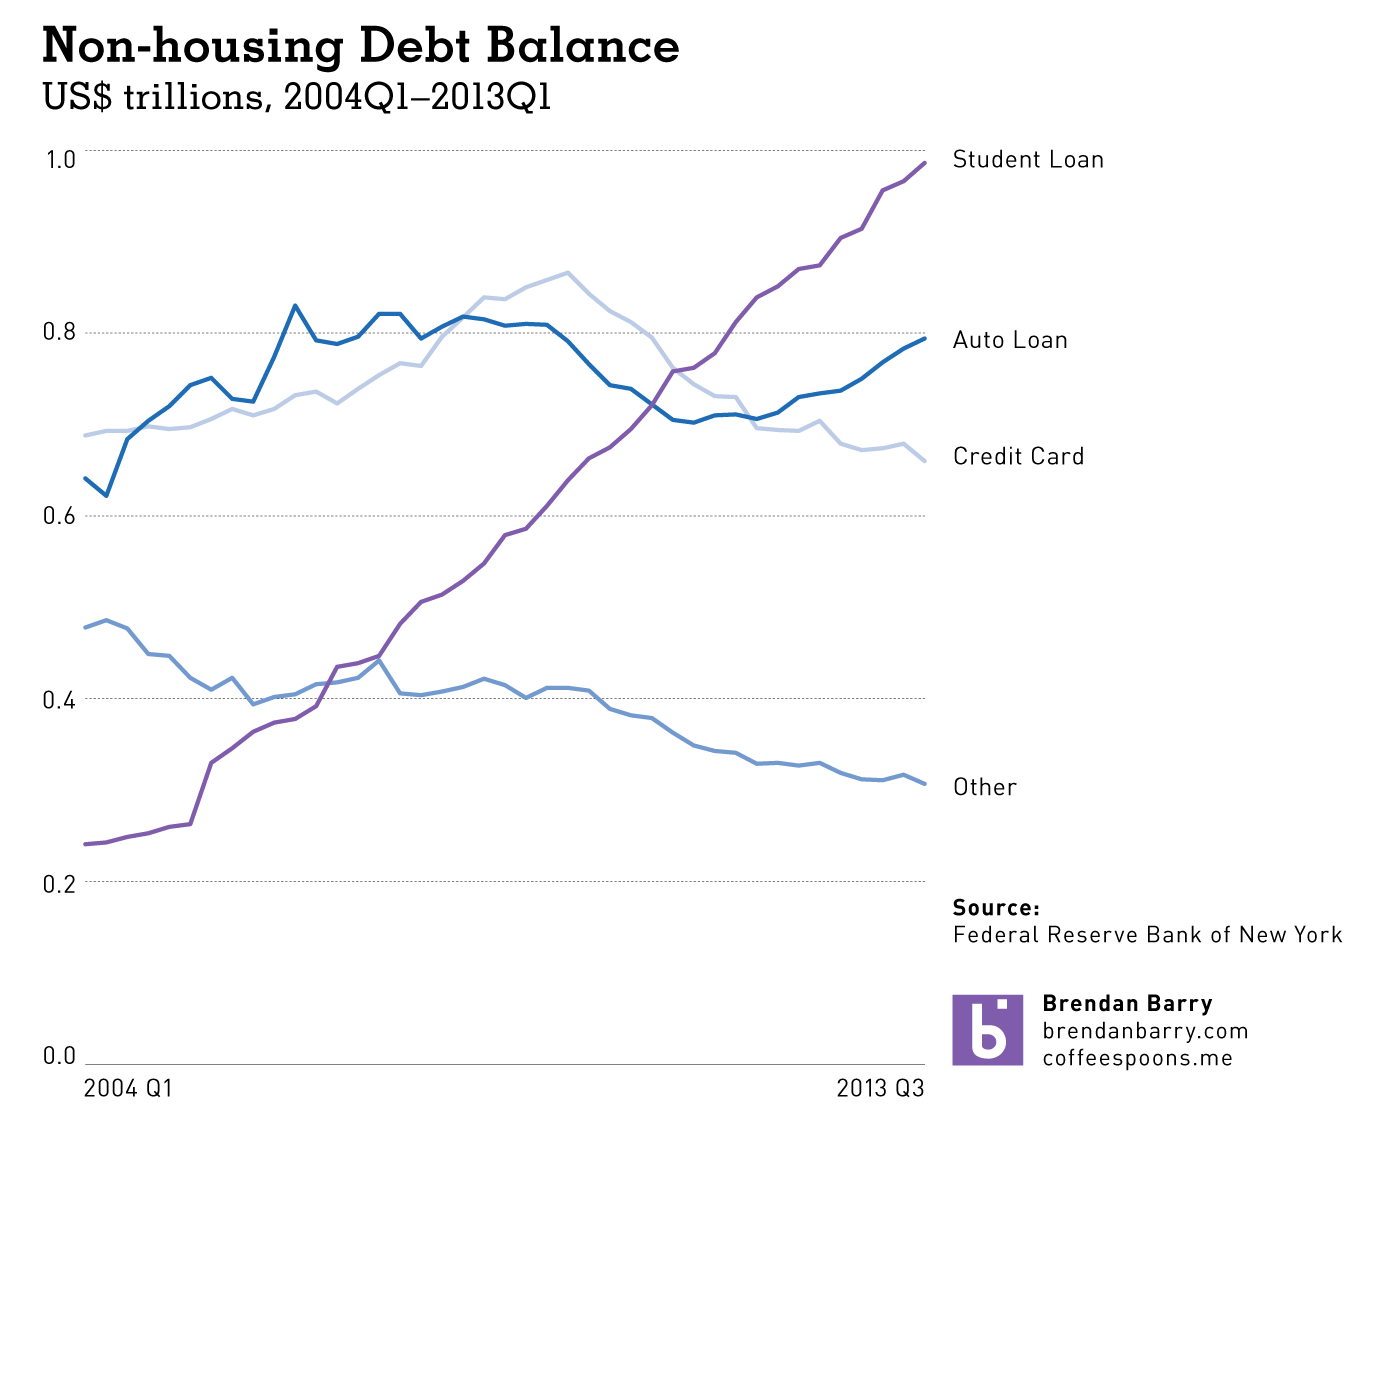 My take on non-housing debt